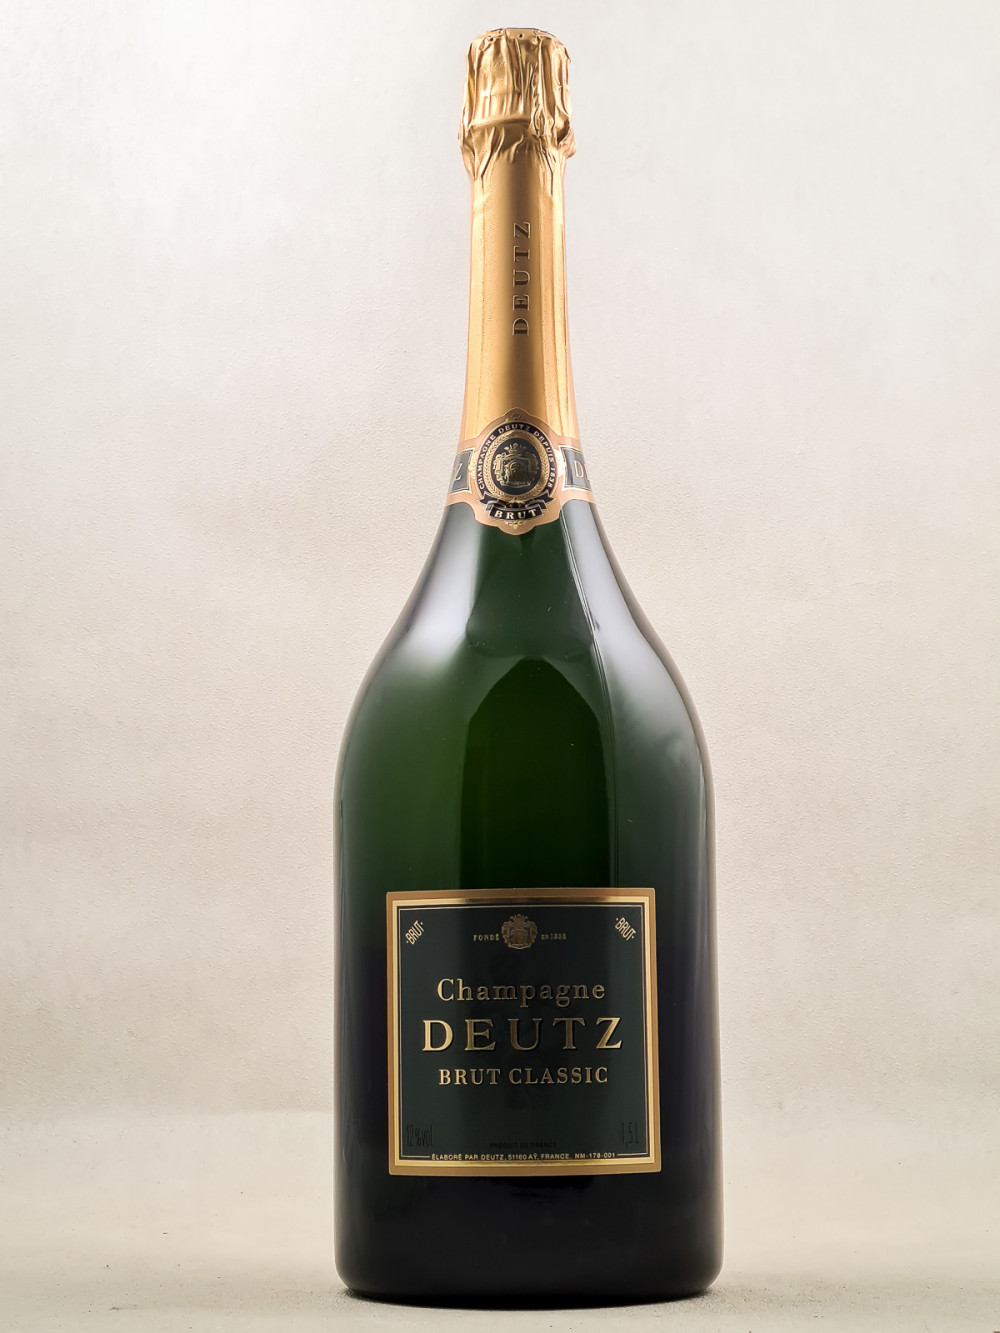 Champagne deutz - Brut classic